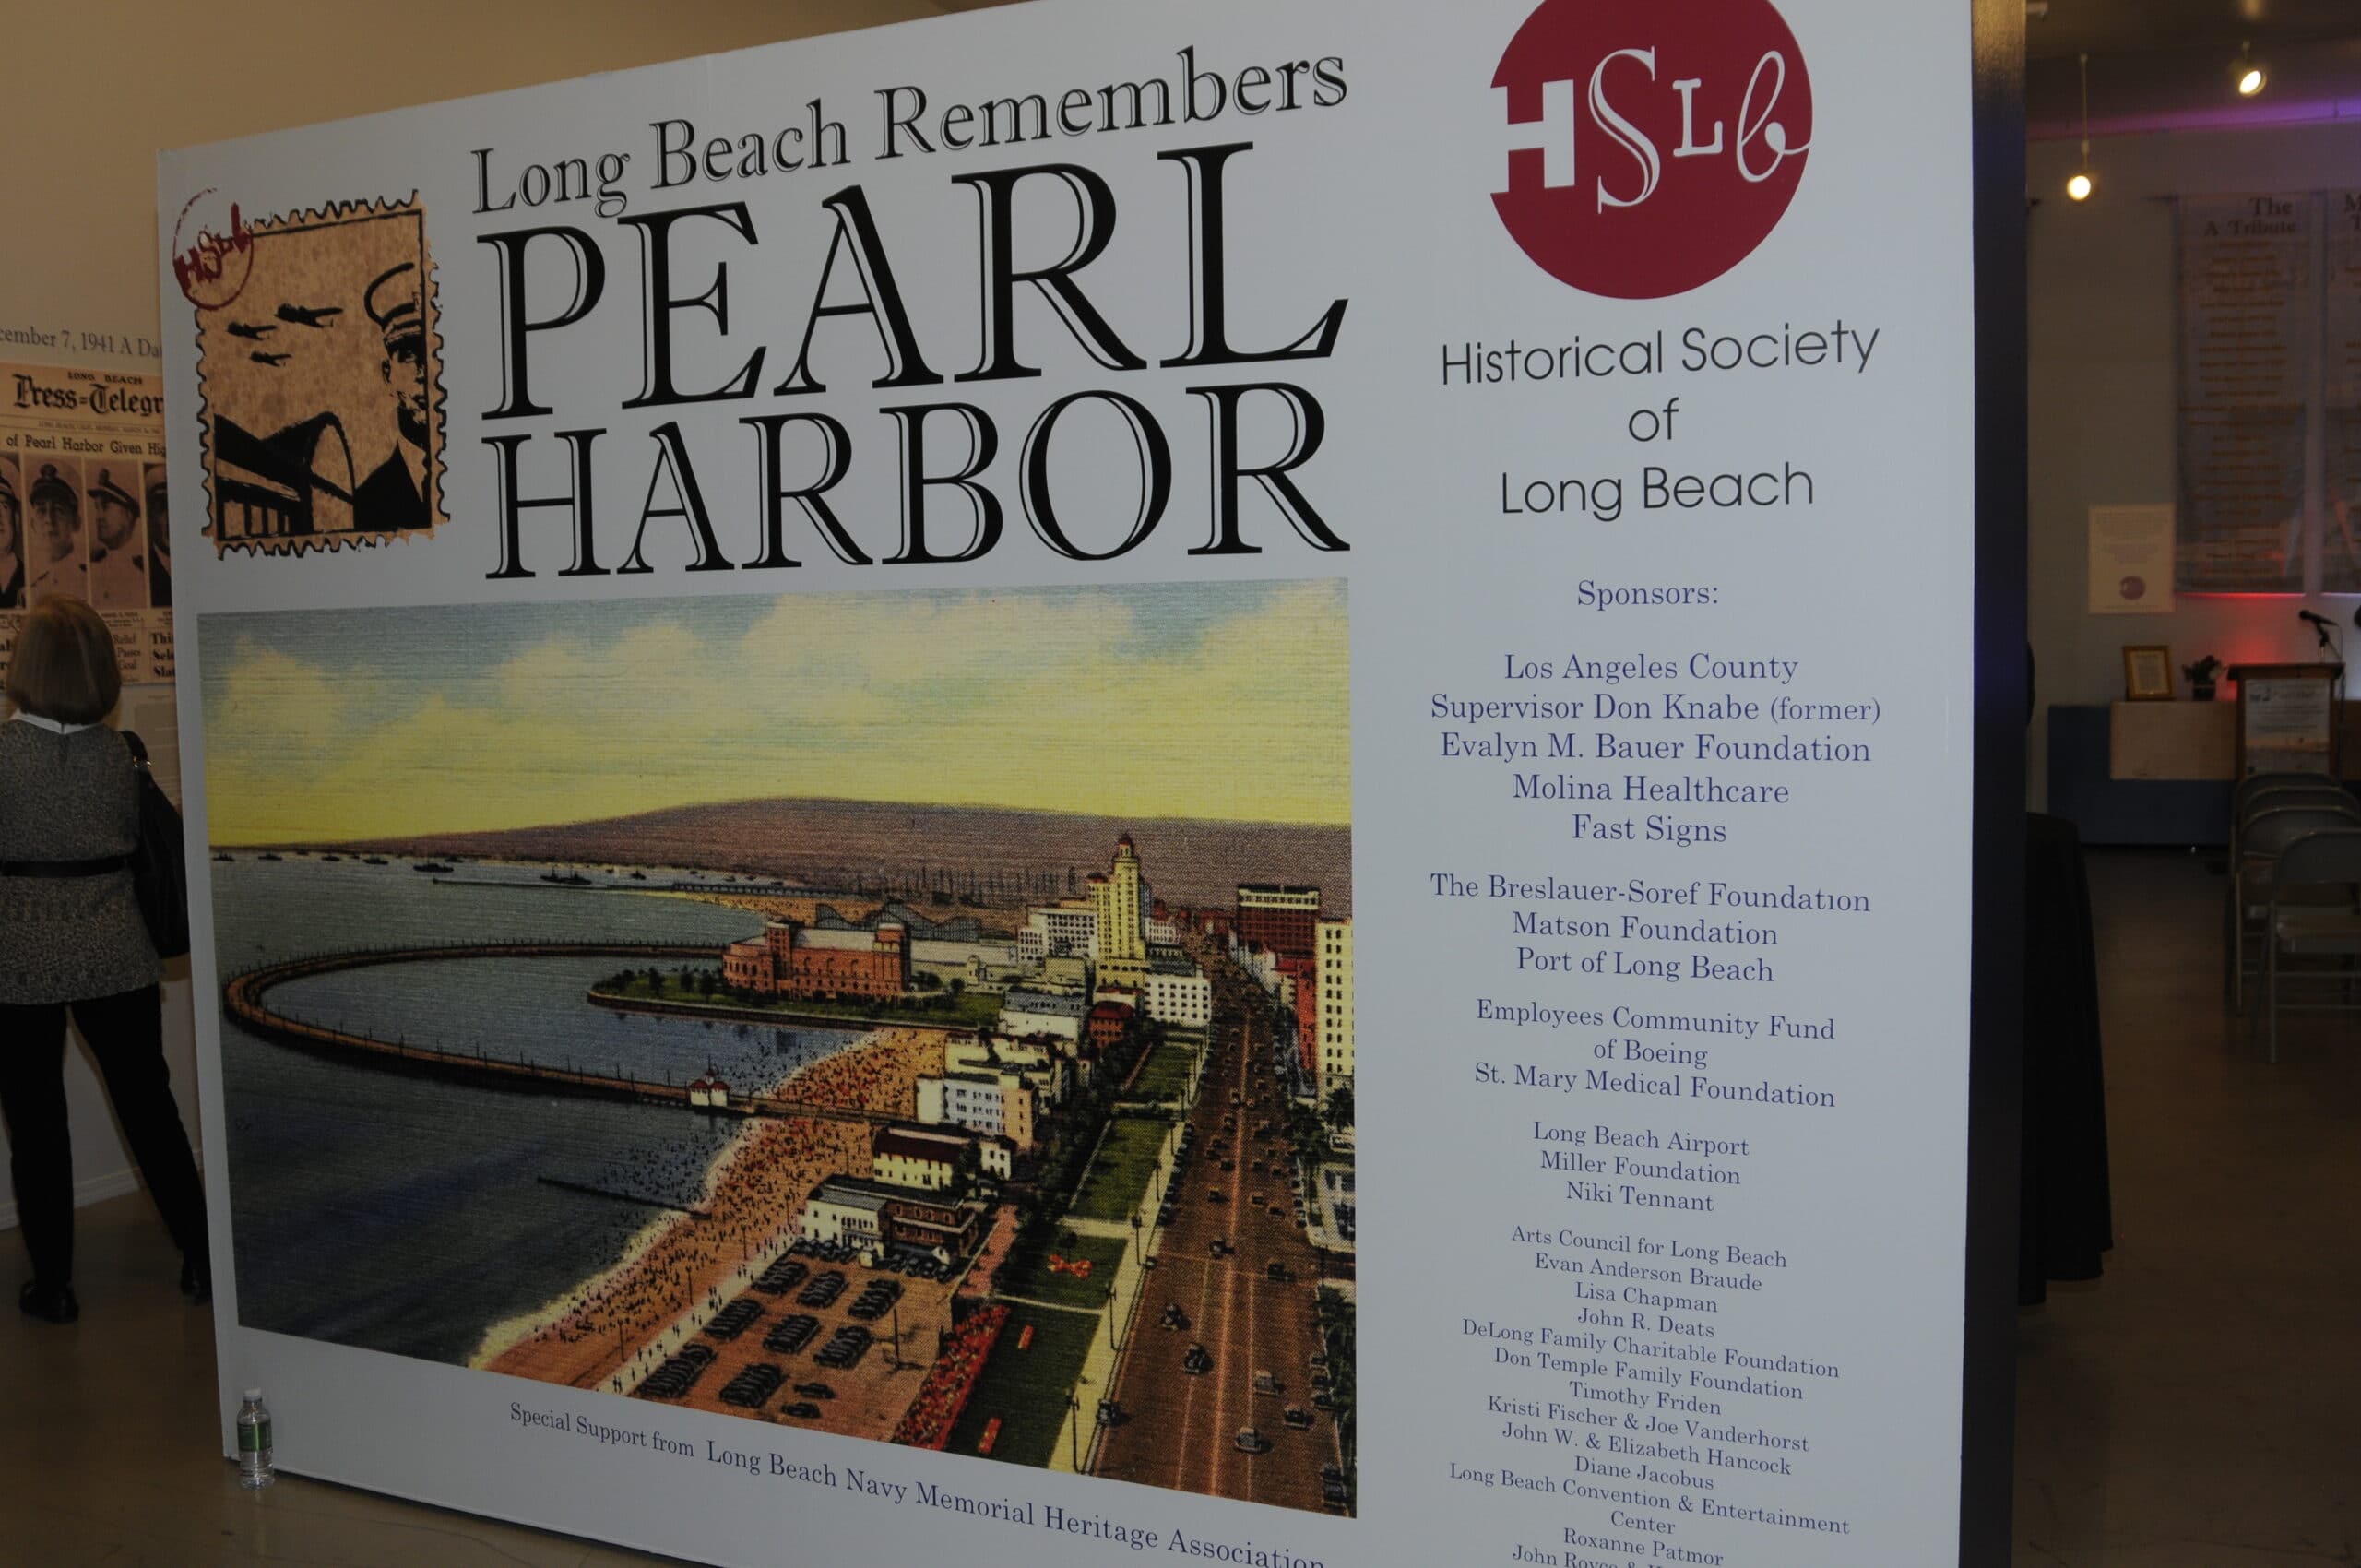 Long beach remembers pearl harbor billboard